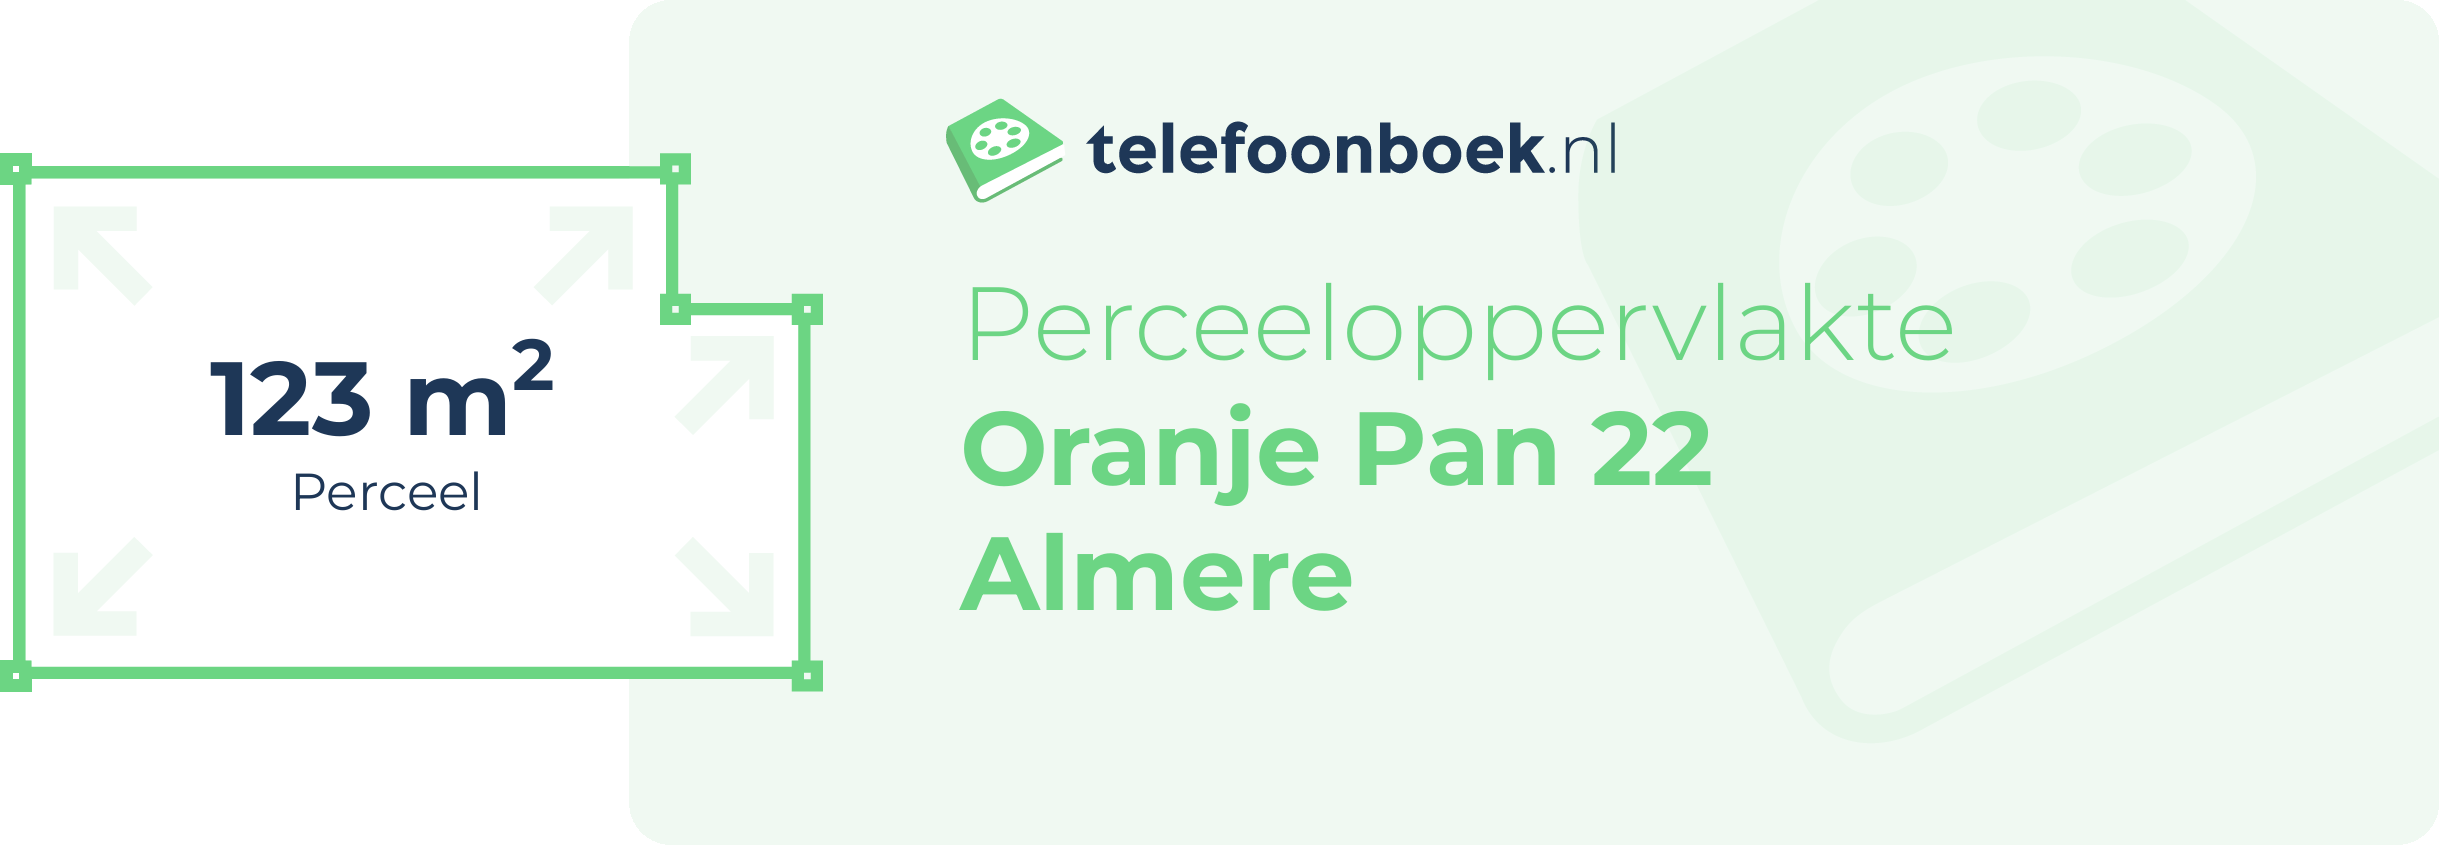 Perceeloppervlakte Oranje Pan 22 Almere